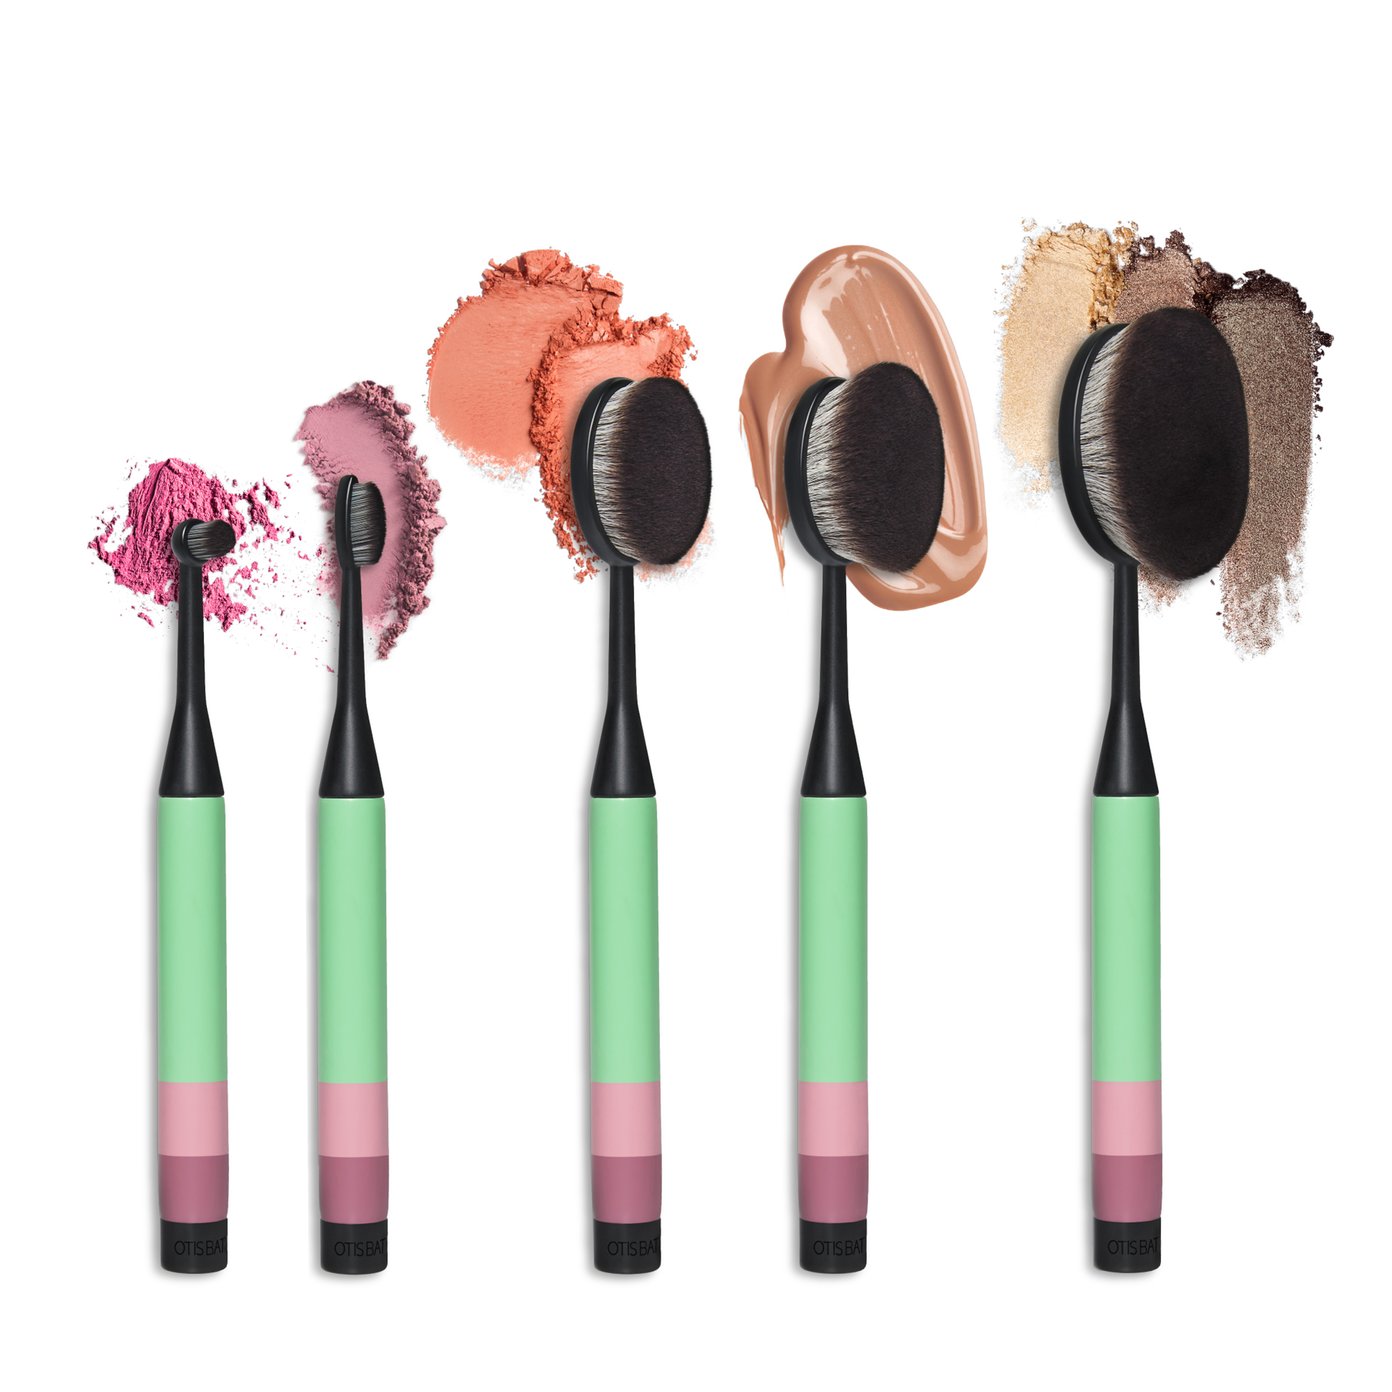 Otis Batterbee The Precision Makeup Brush Edit | Shop Bazaar